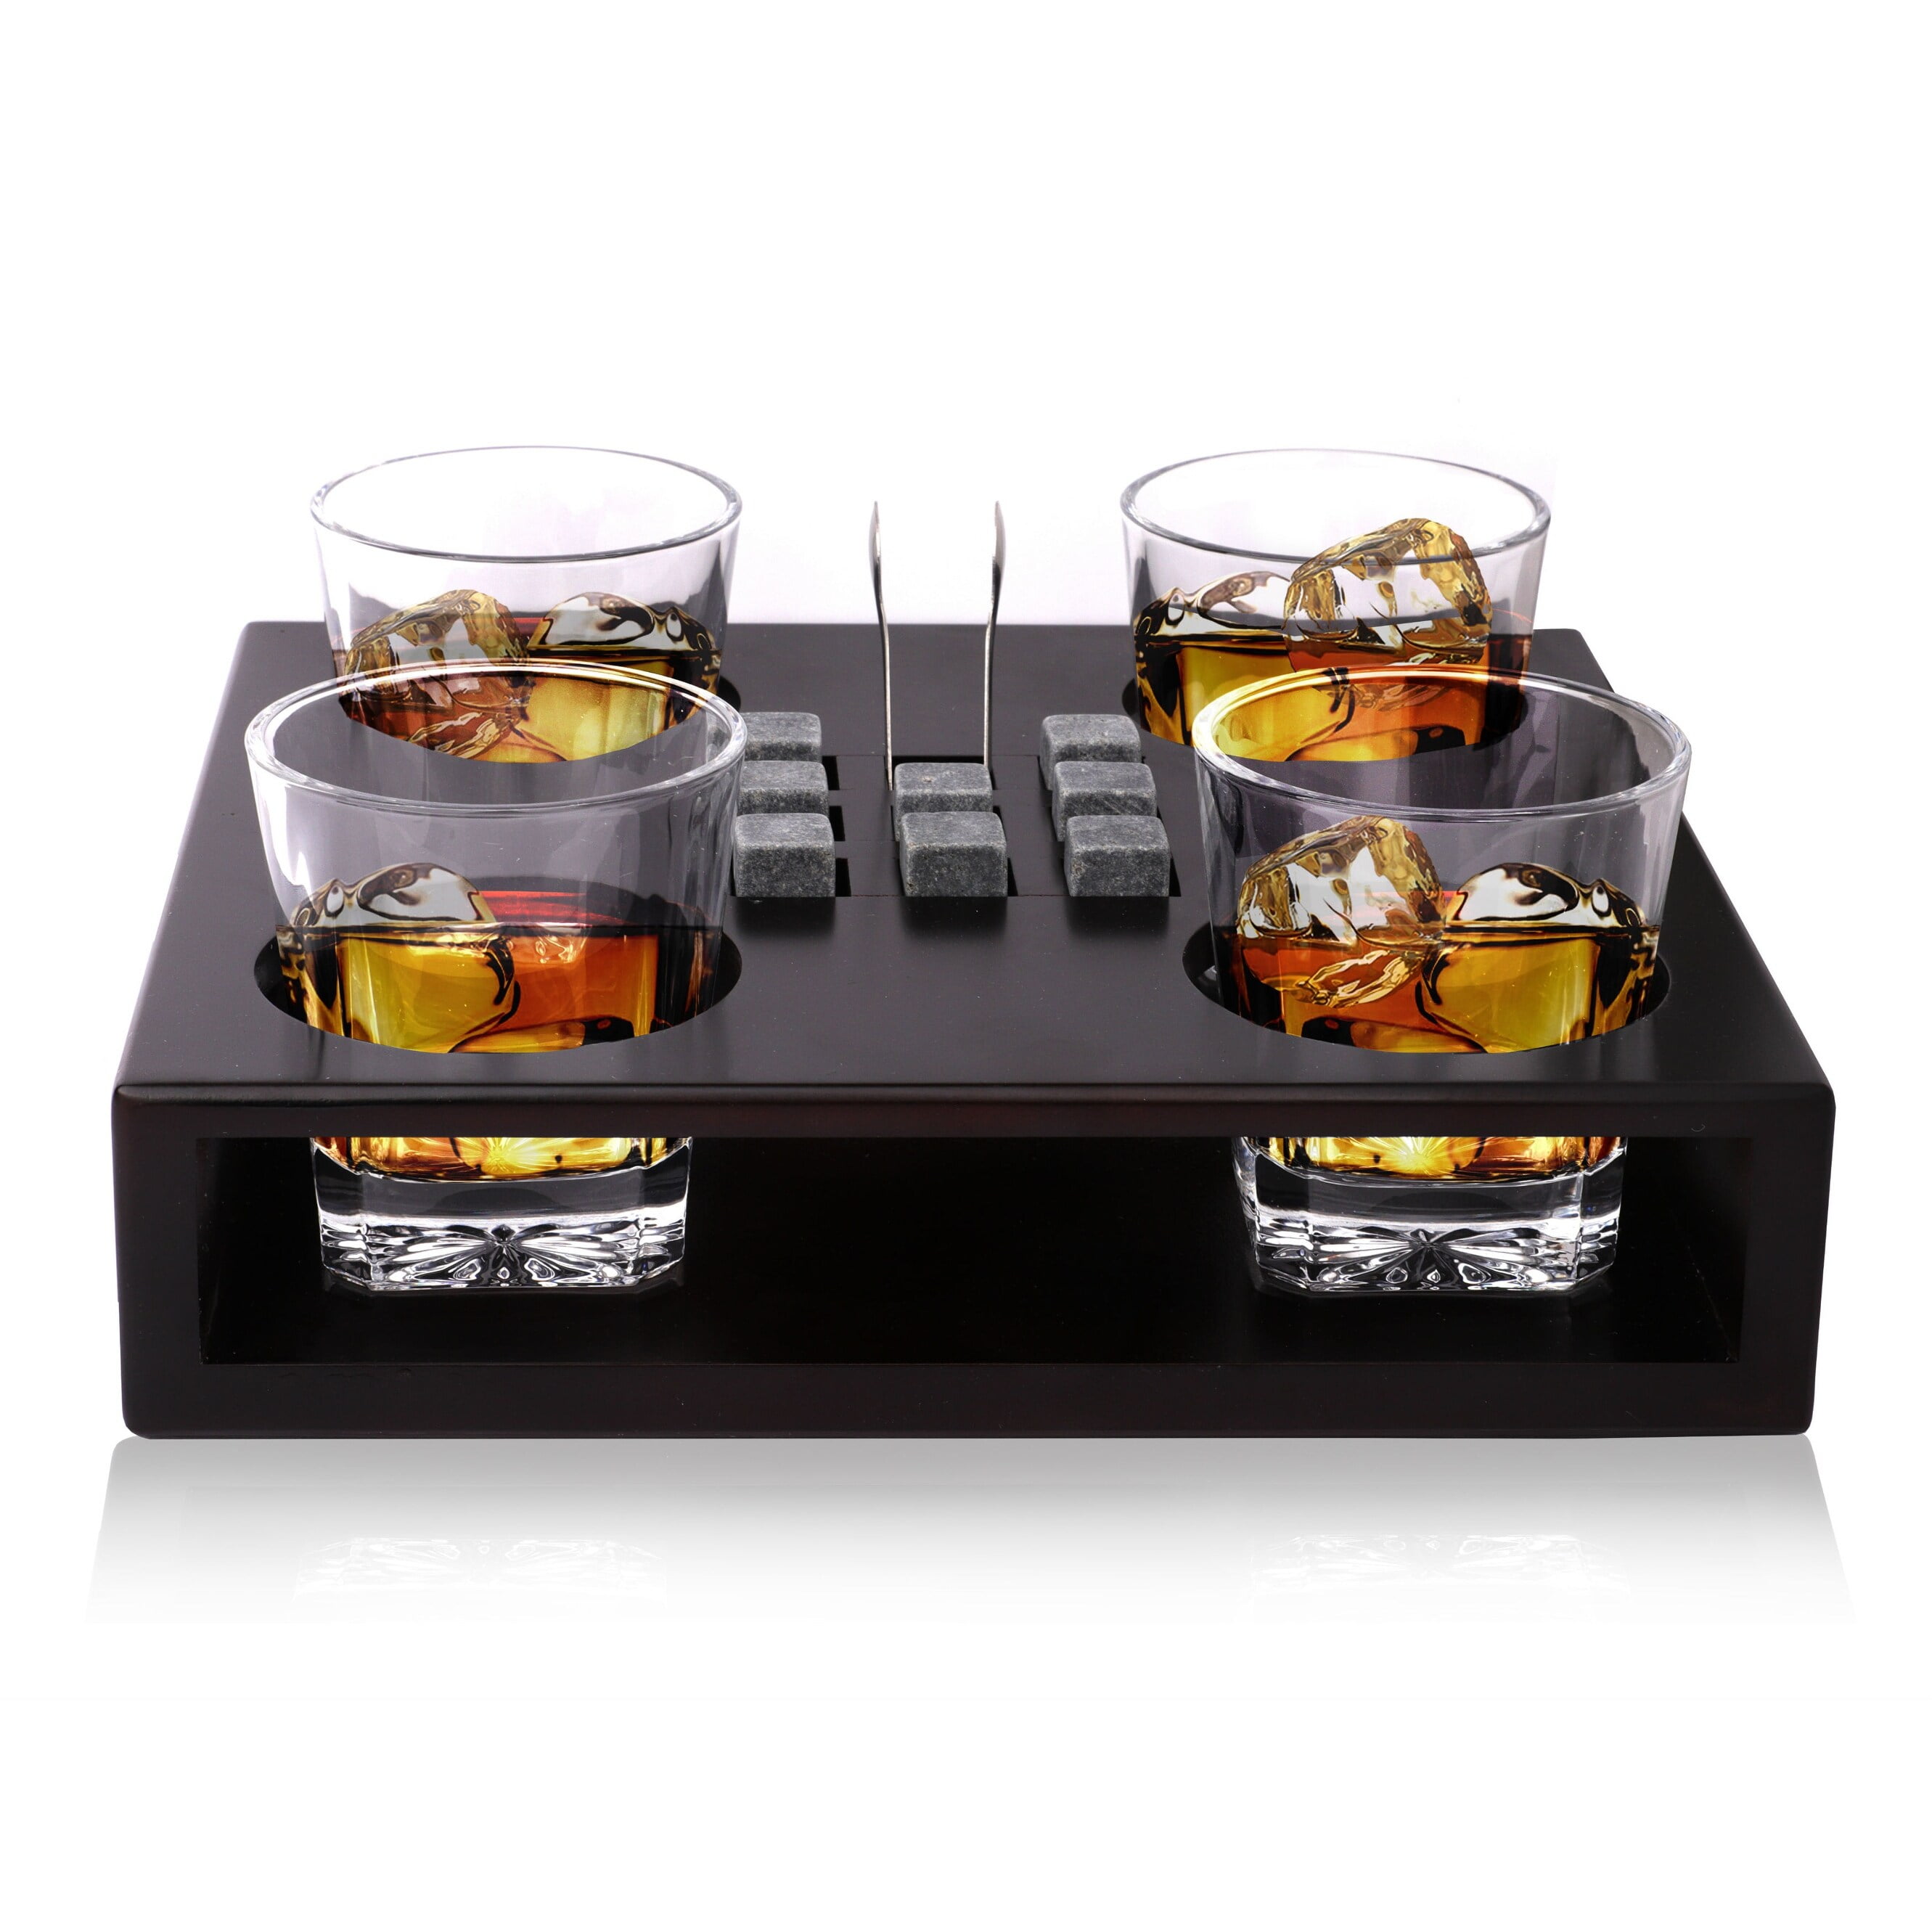 Bezrat Old Fashioned Whiskey Glasses Set 1336